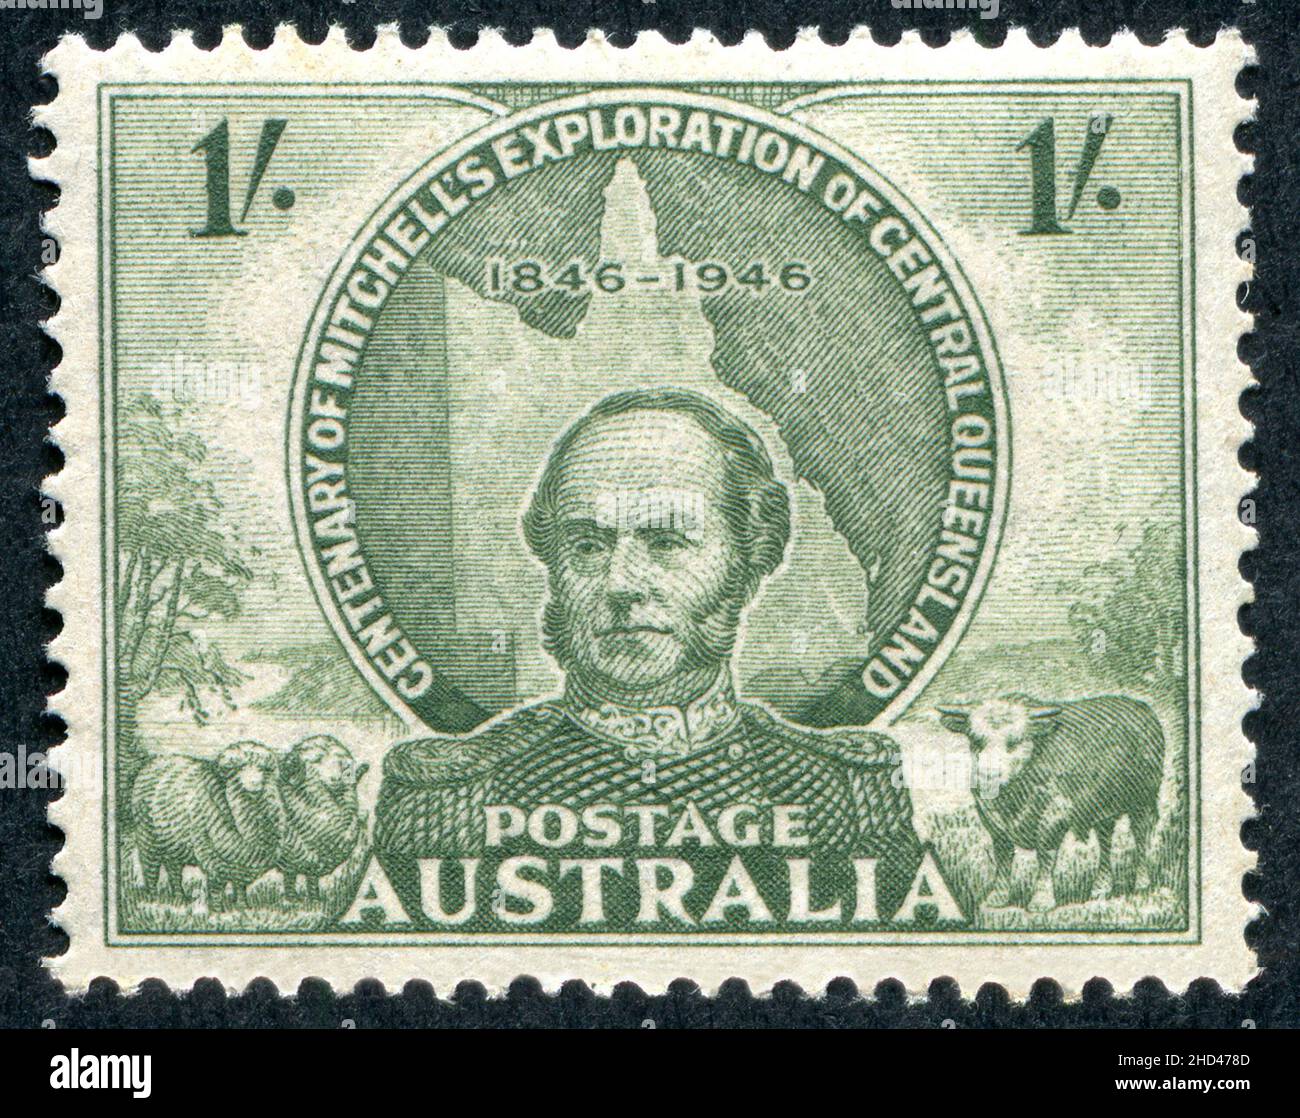 Se presentó el sello postal conmemorativo con la leyenda “Malvinas